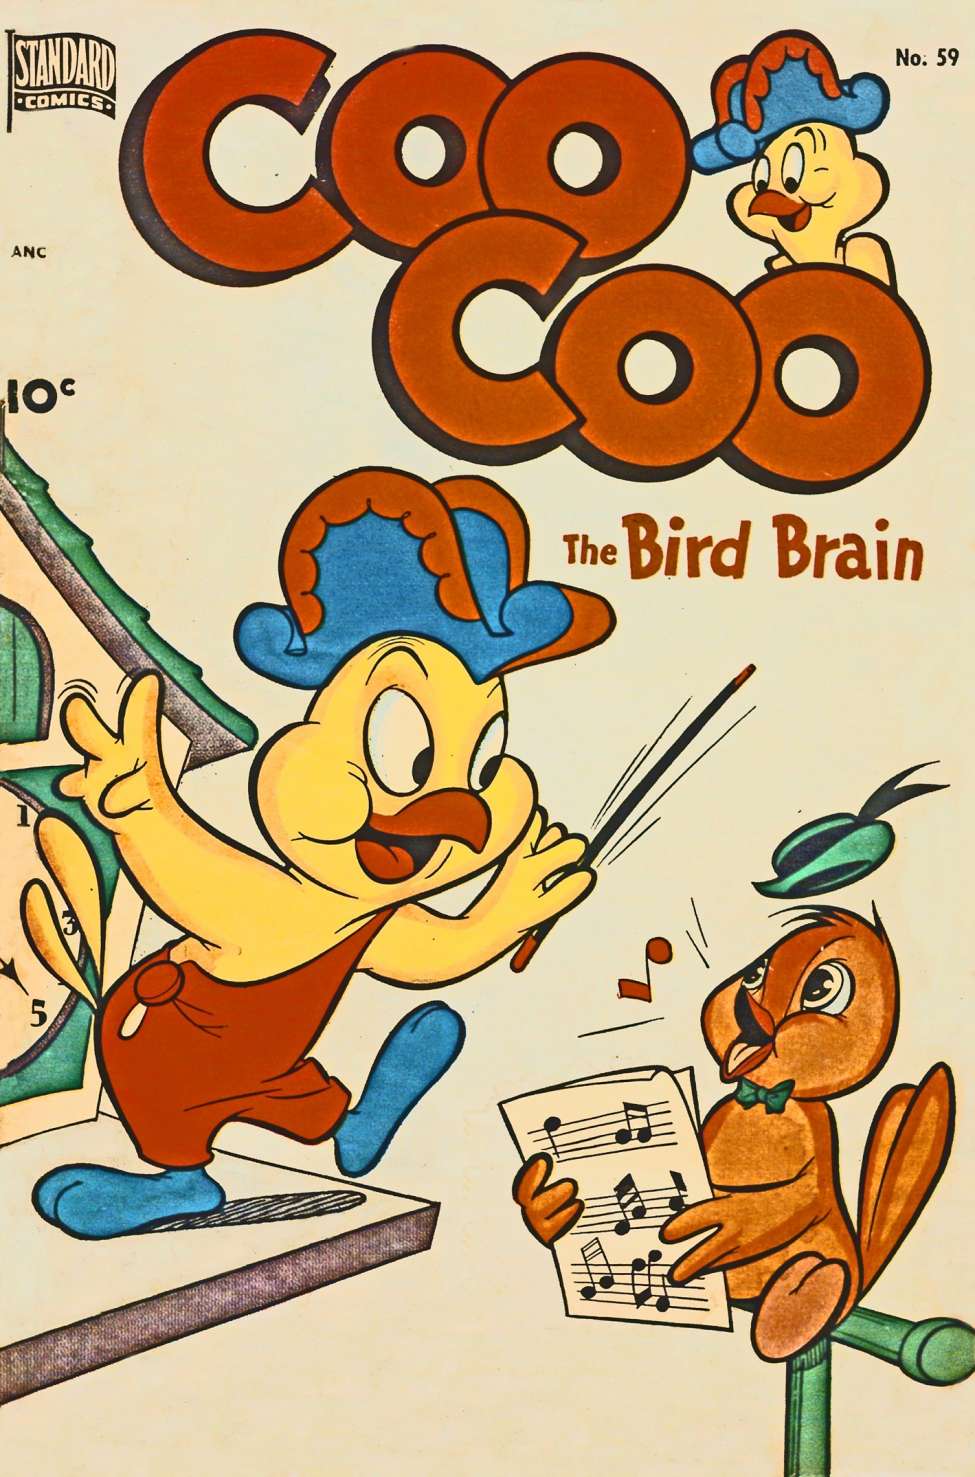 Comic Book Cover For Coo Coo Comics 59